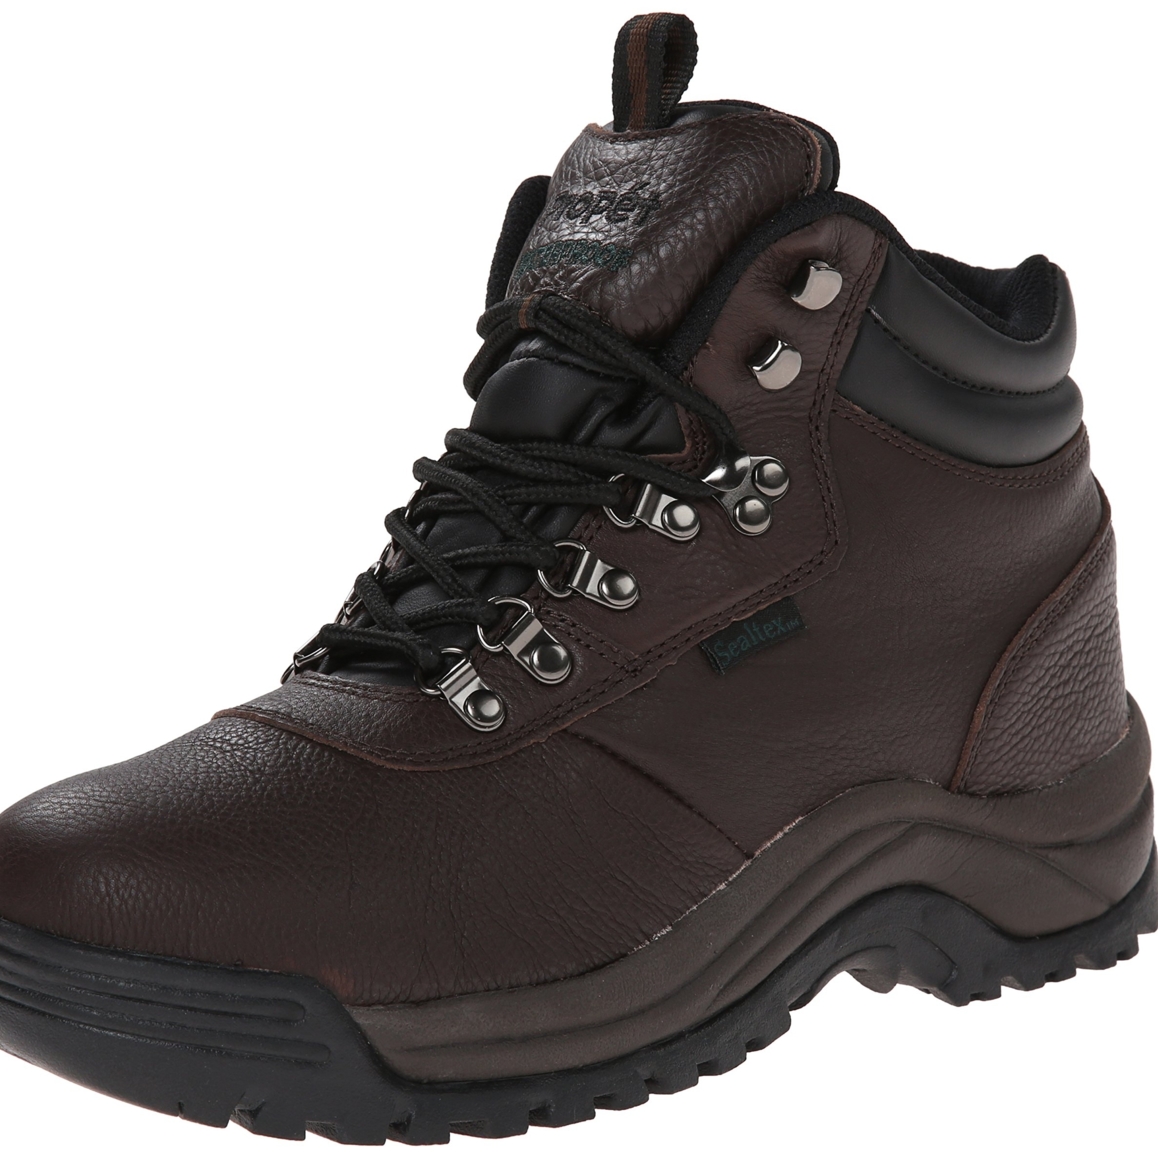 Propet Men's Cliff Walker Hiking Boot Bronco Brown - M3188BRO - BRONCO BROWN, 10.5-4E